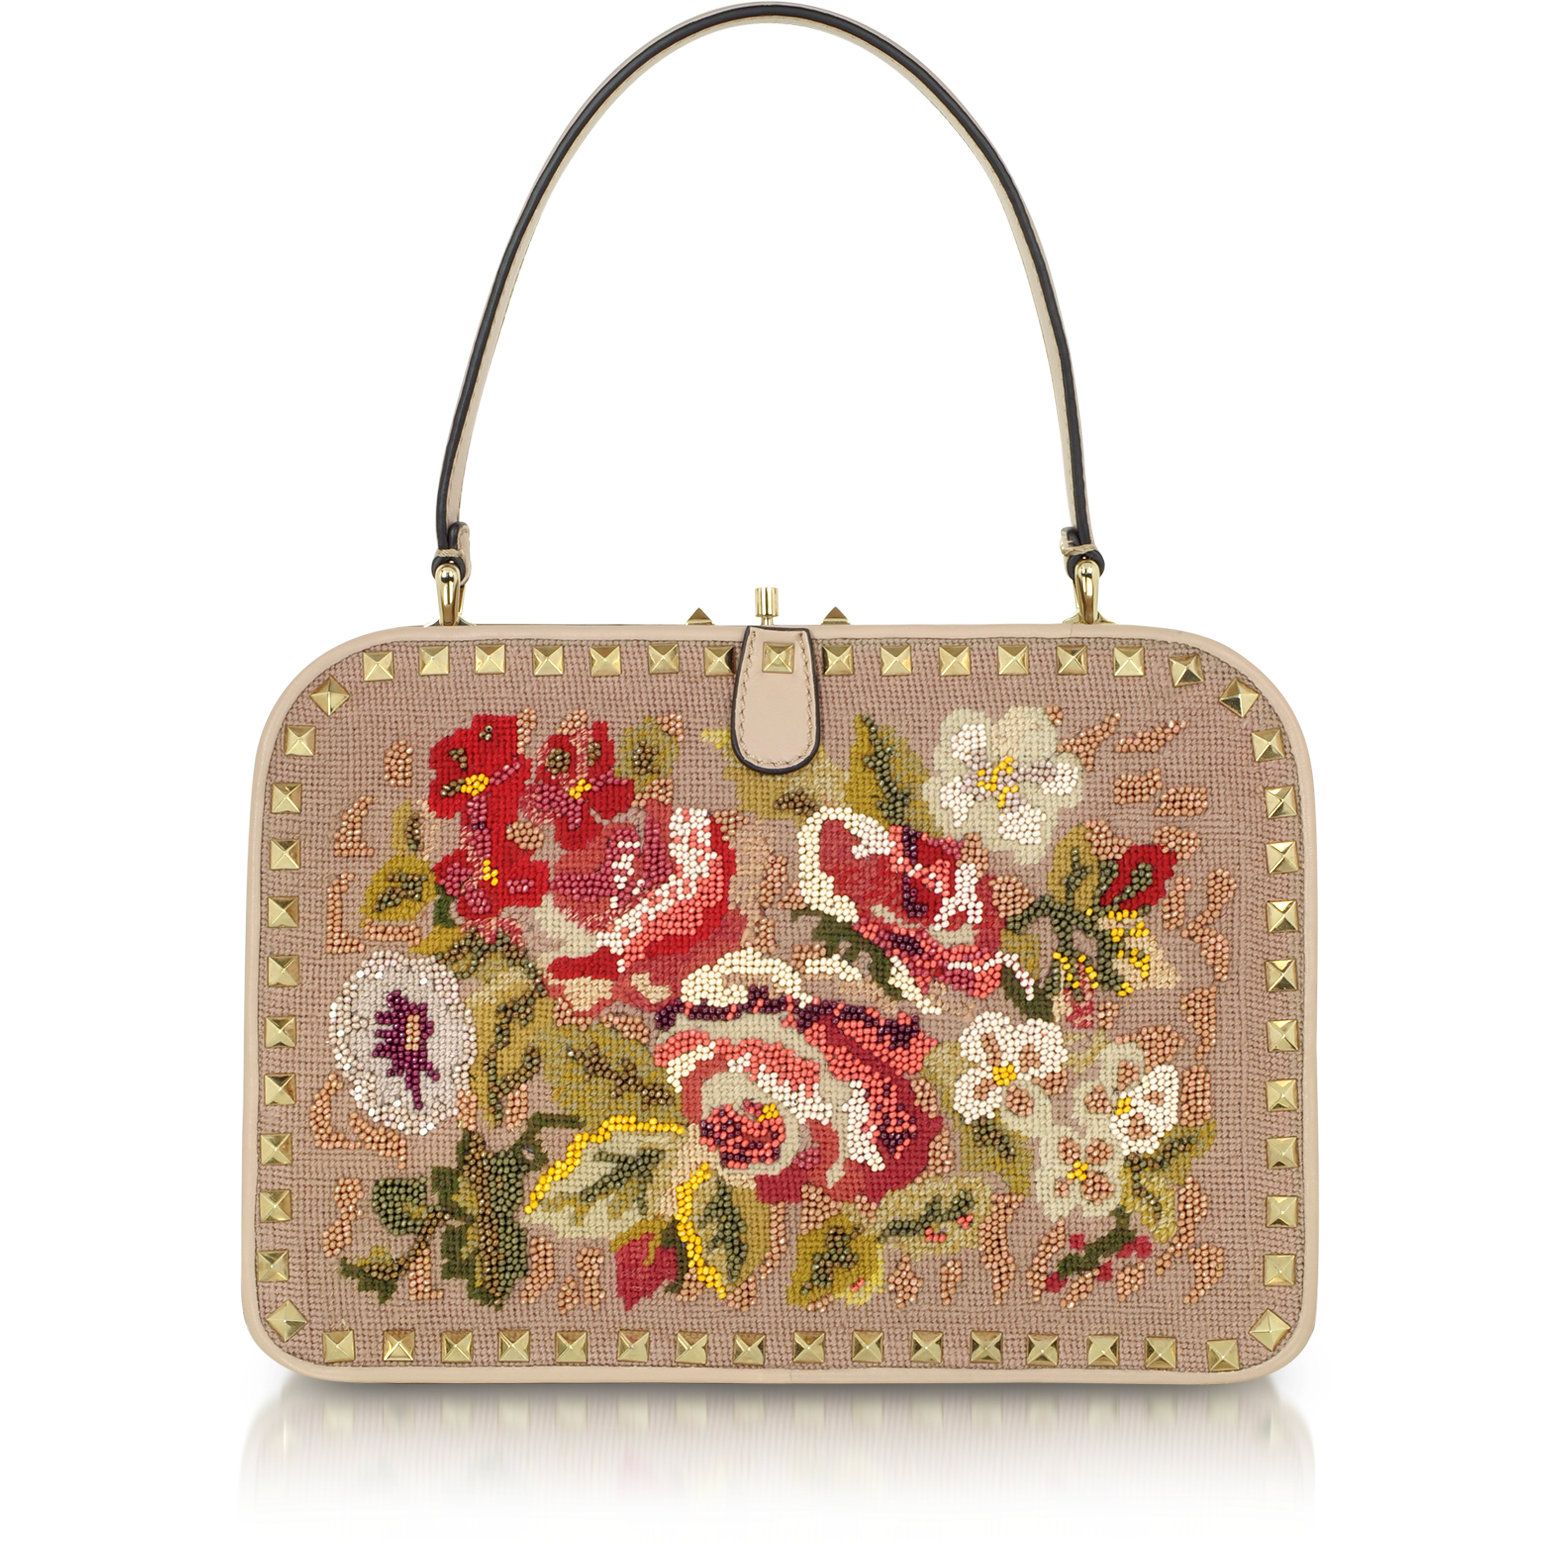 Valentino Rockstud Embroidered Frame Handbag at FORZIERI